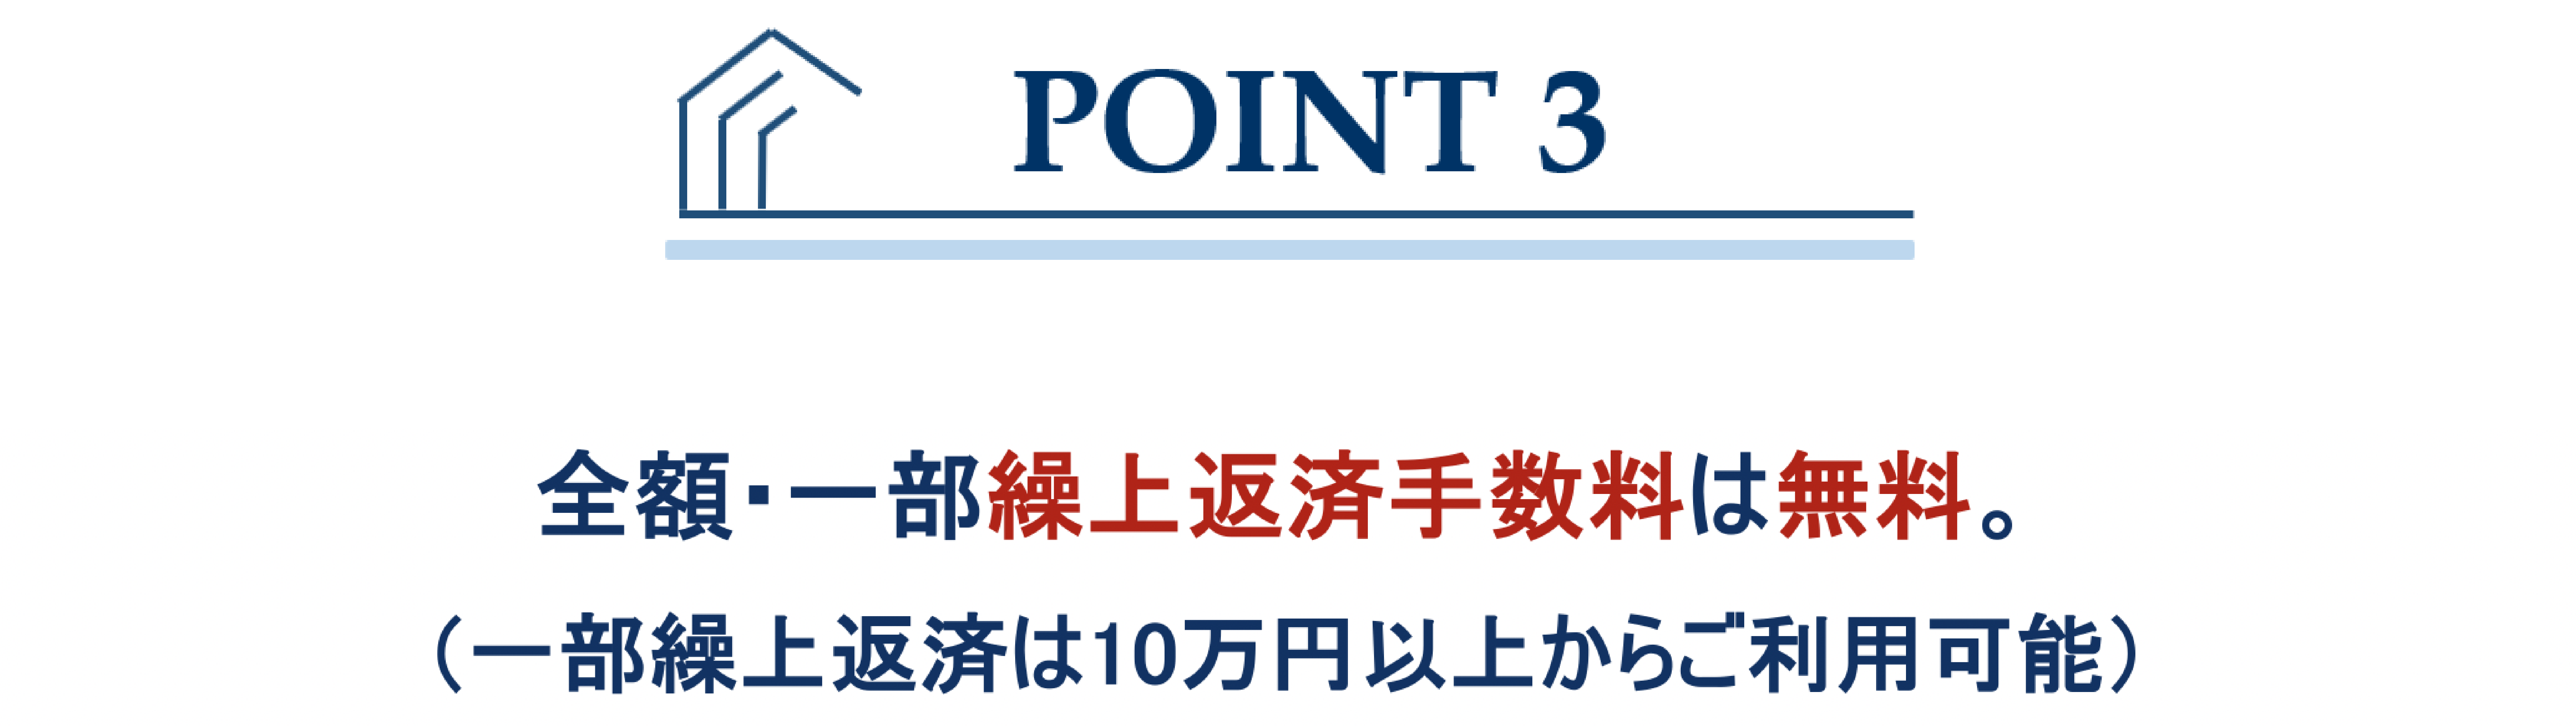 POINT3 全額・一部繰上返済手数料は無料。（一部繰上返済は10万円以上からゴチよう可能）